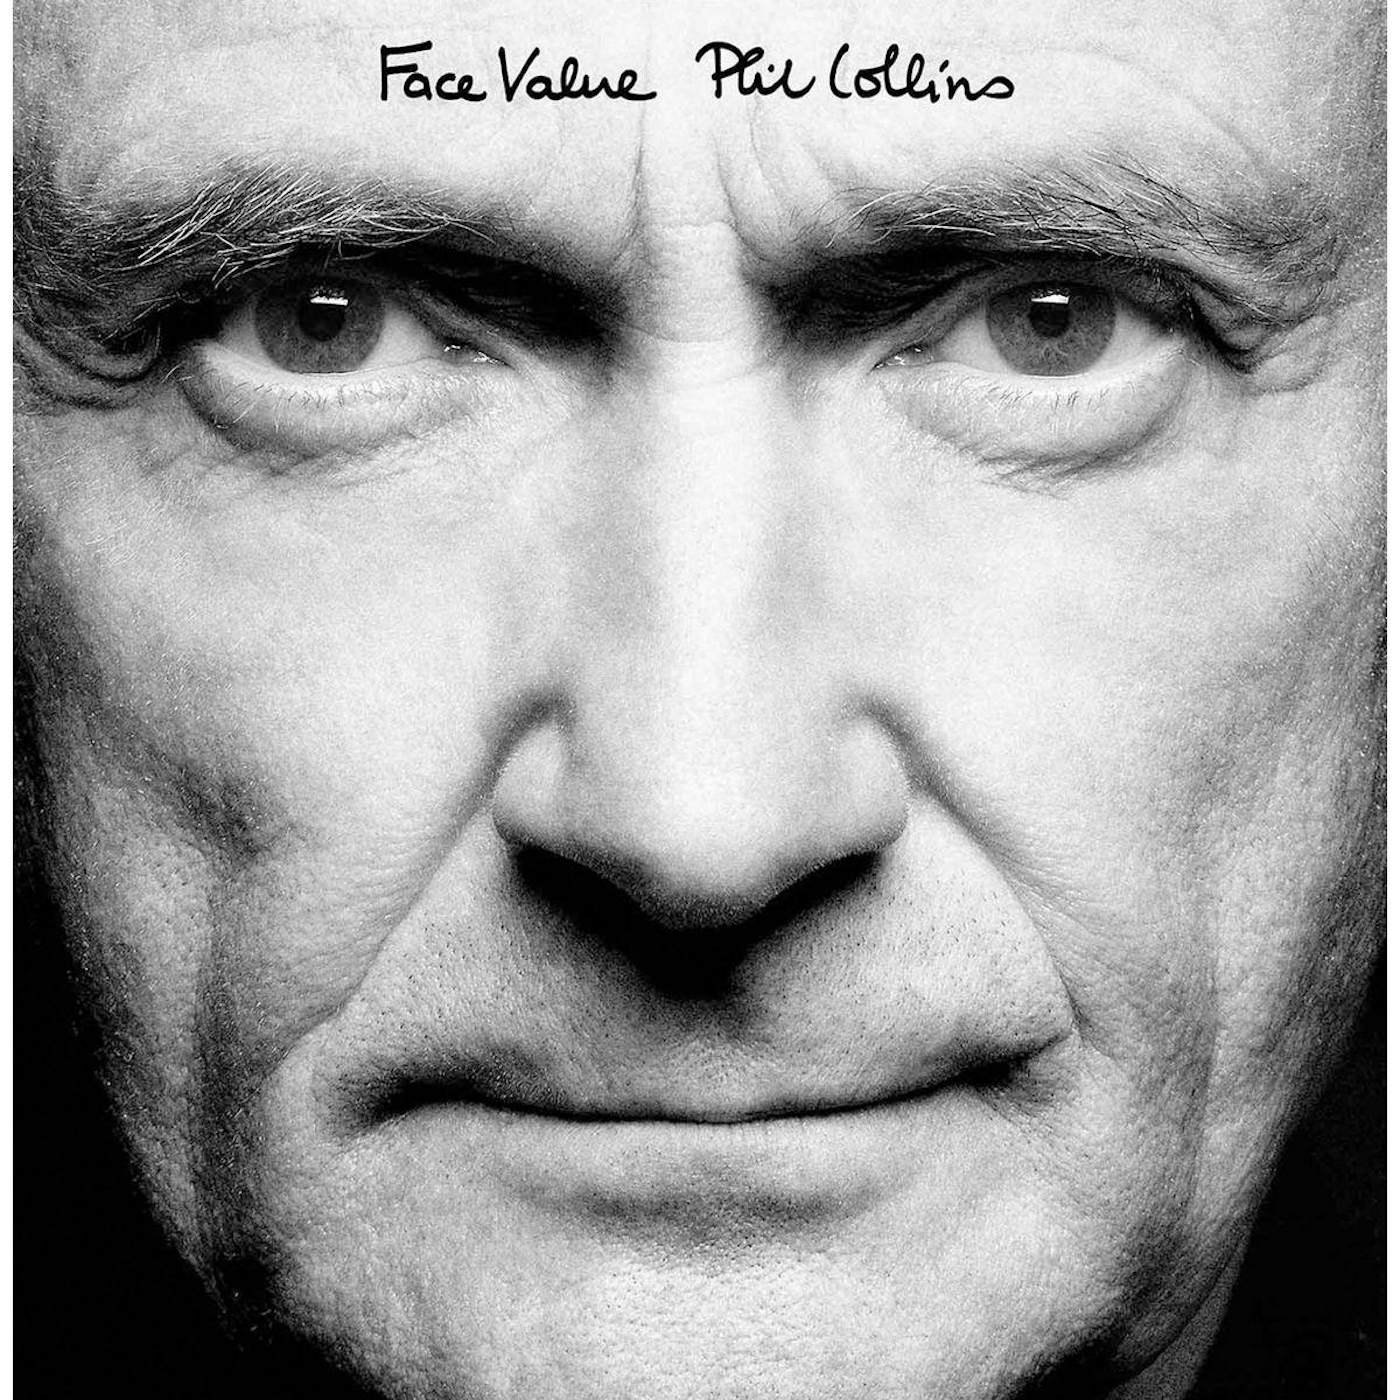 Phil Collins Face Value Vinyl Record